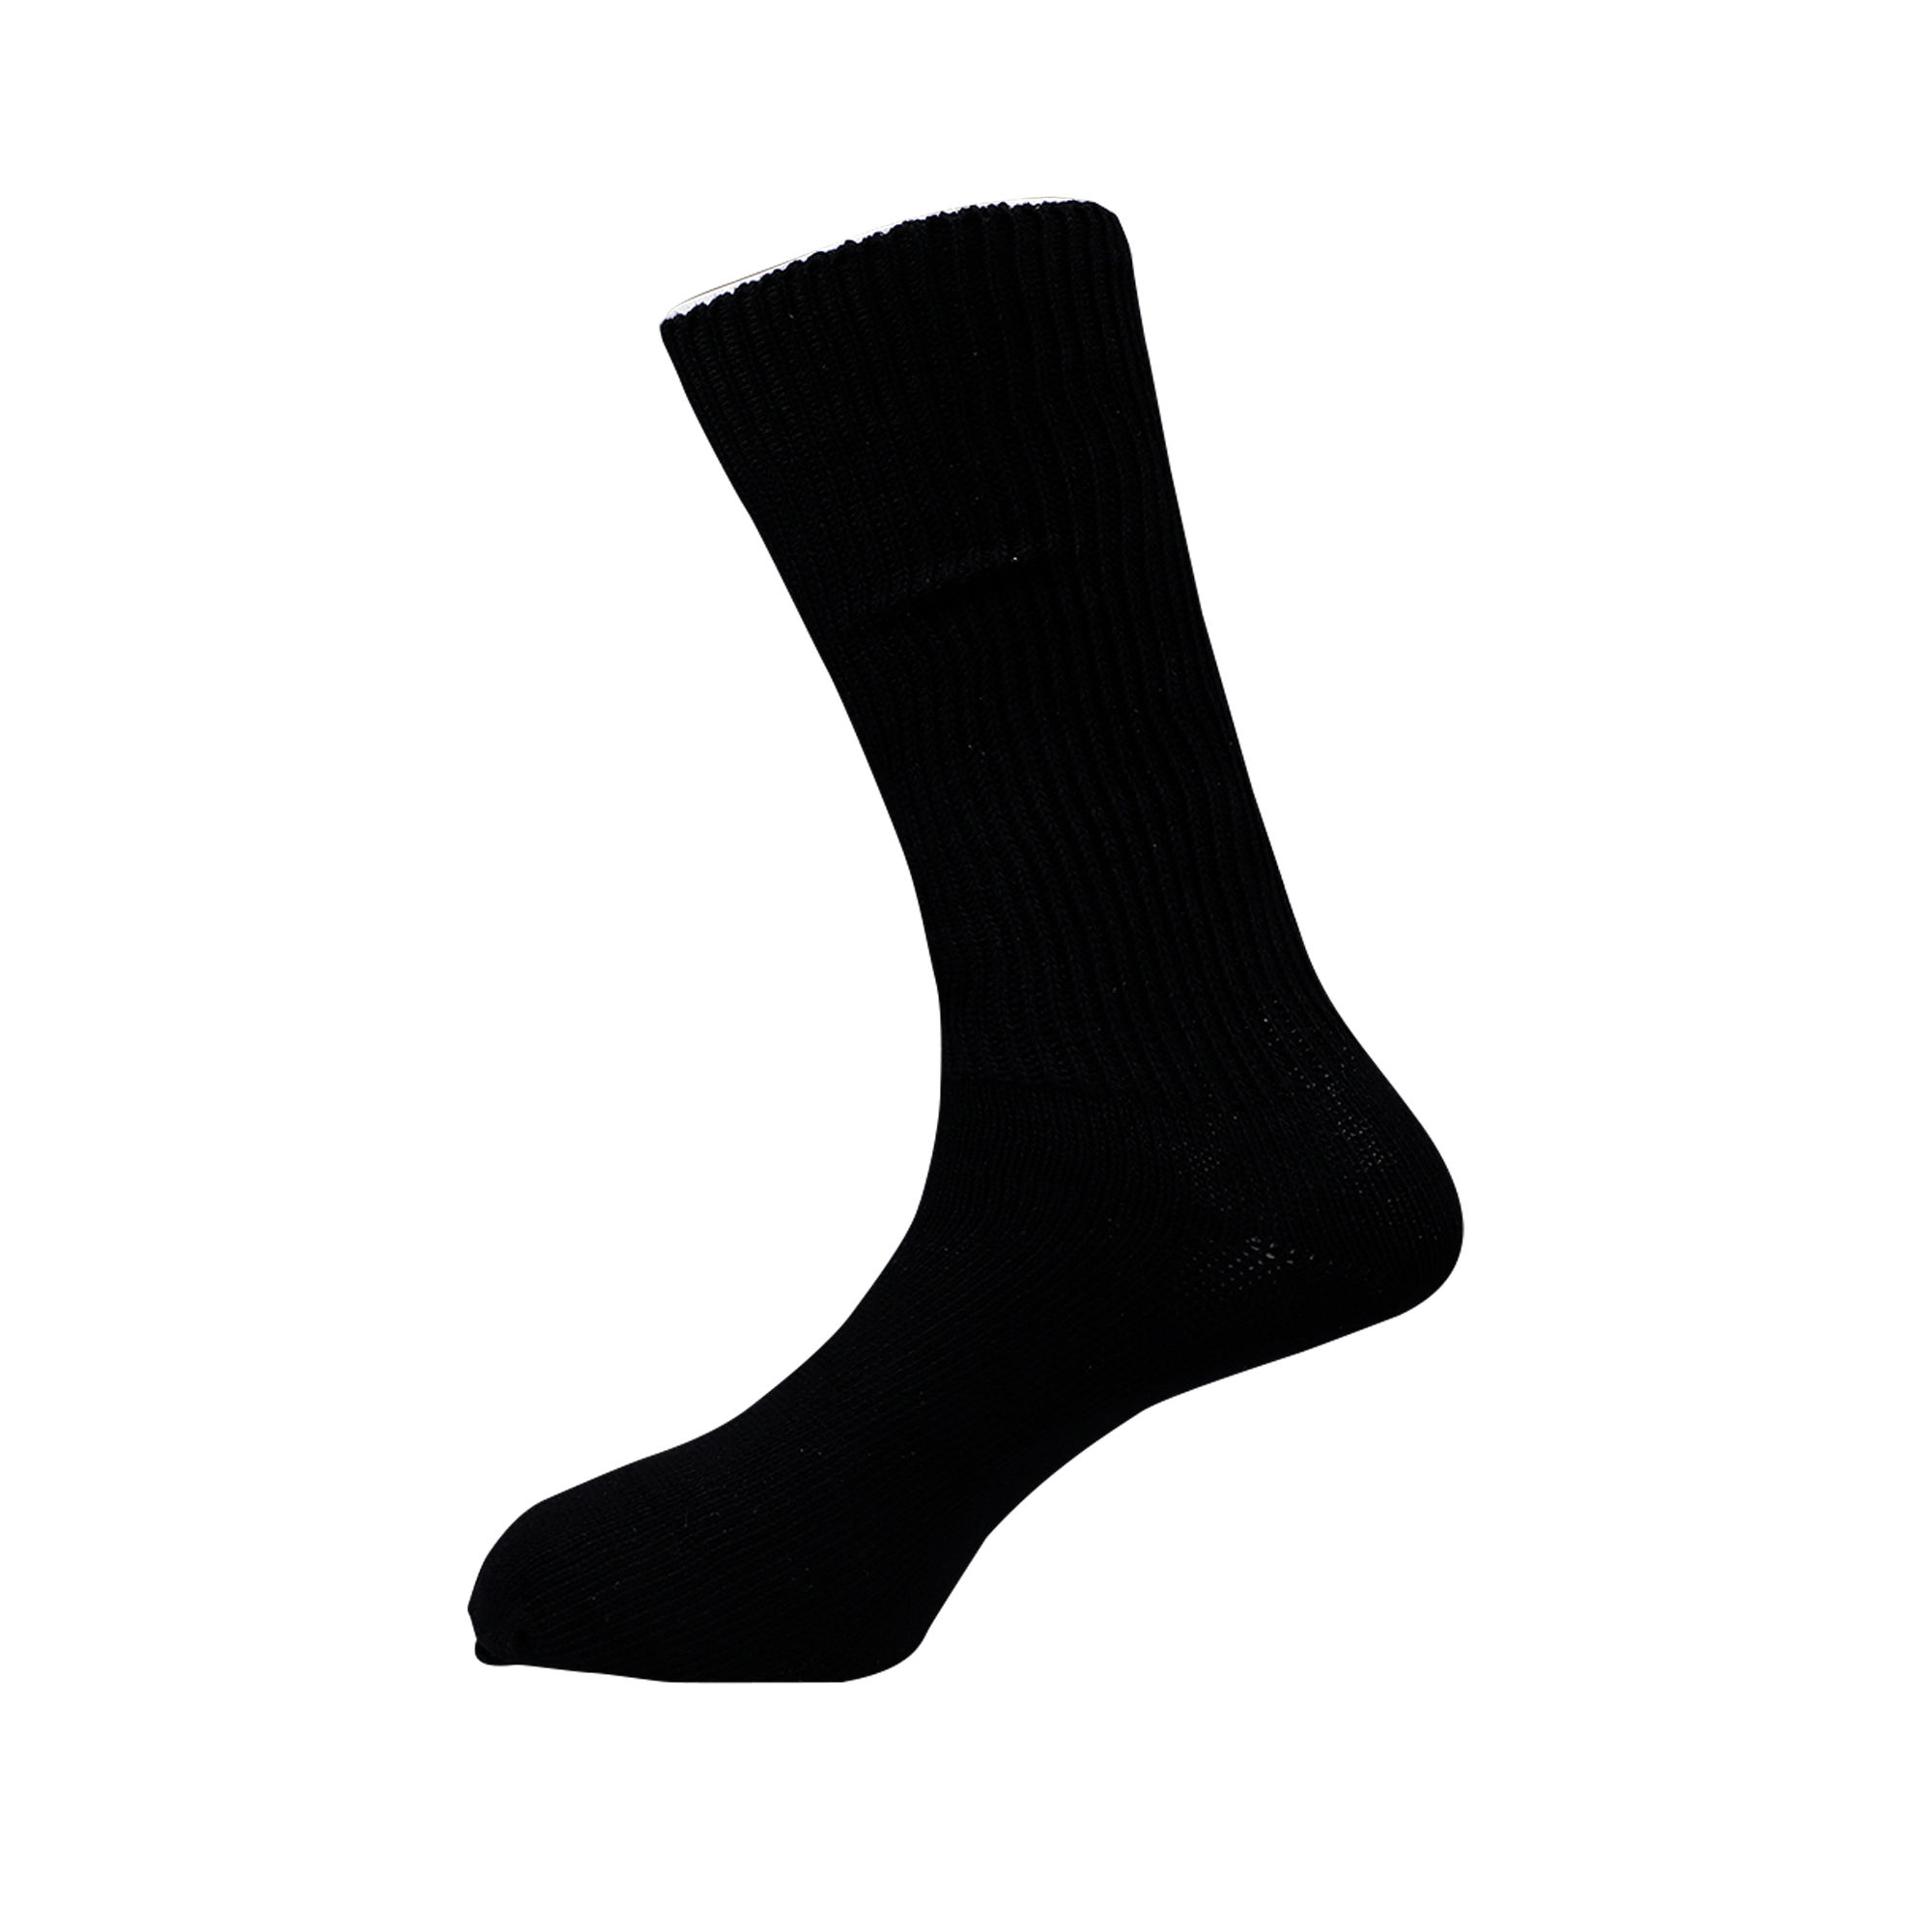 Renewa Simcan Comfort Socks Large, 1 Pair Price, Uses, Side Effects ...